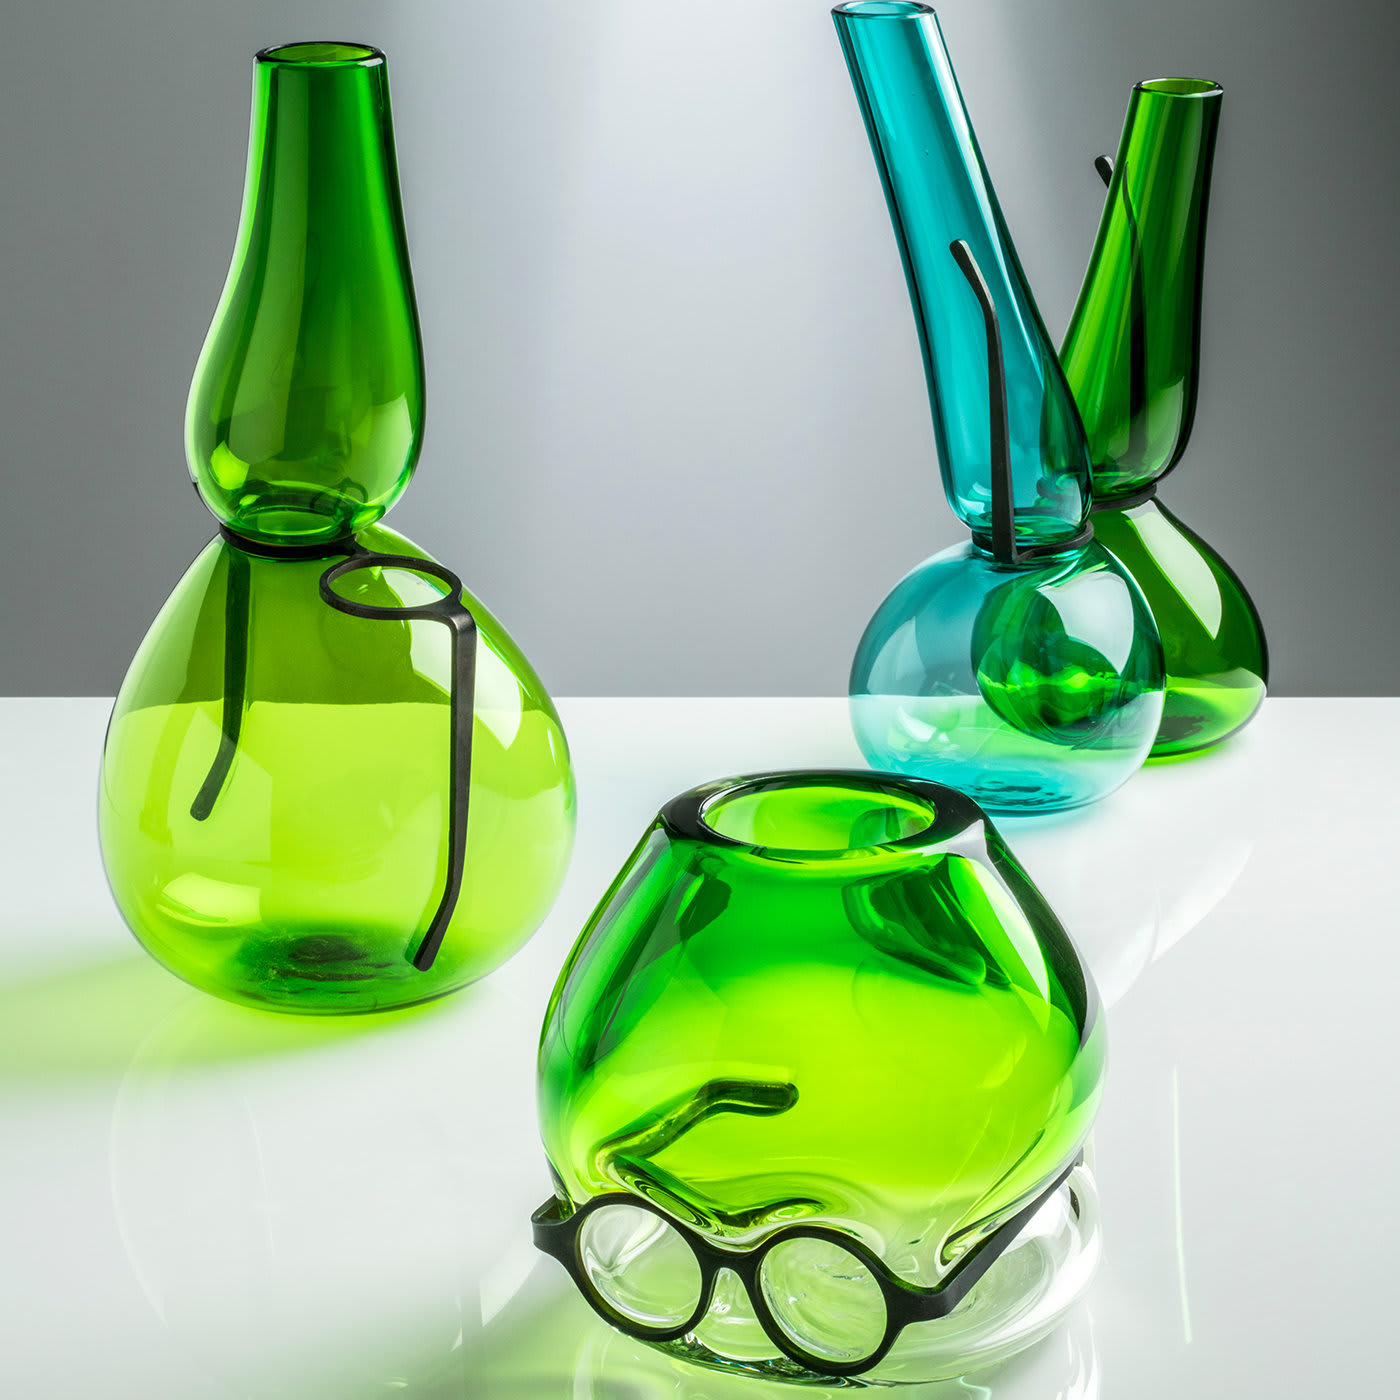 Where Are My Glasses? Single Lens Vase by Ron Arad Studio # 6 - Venini